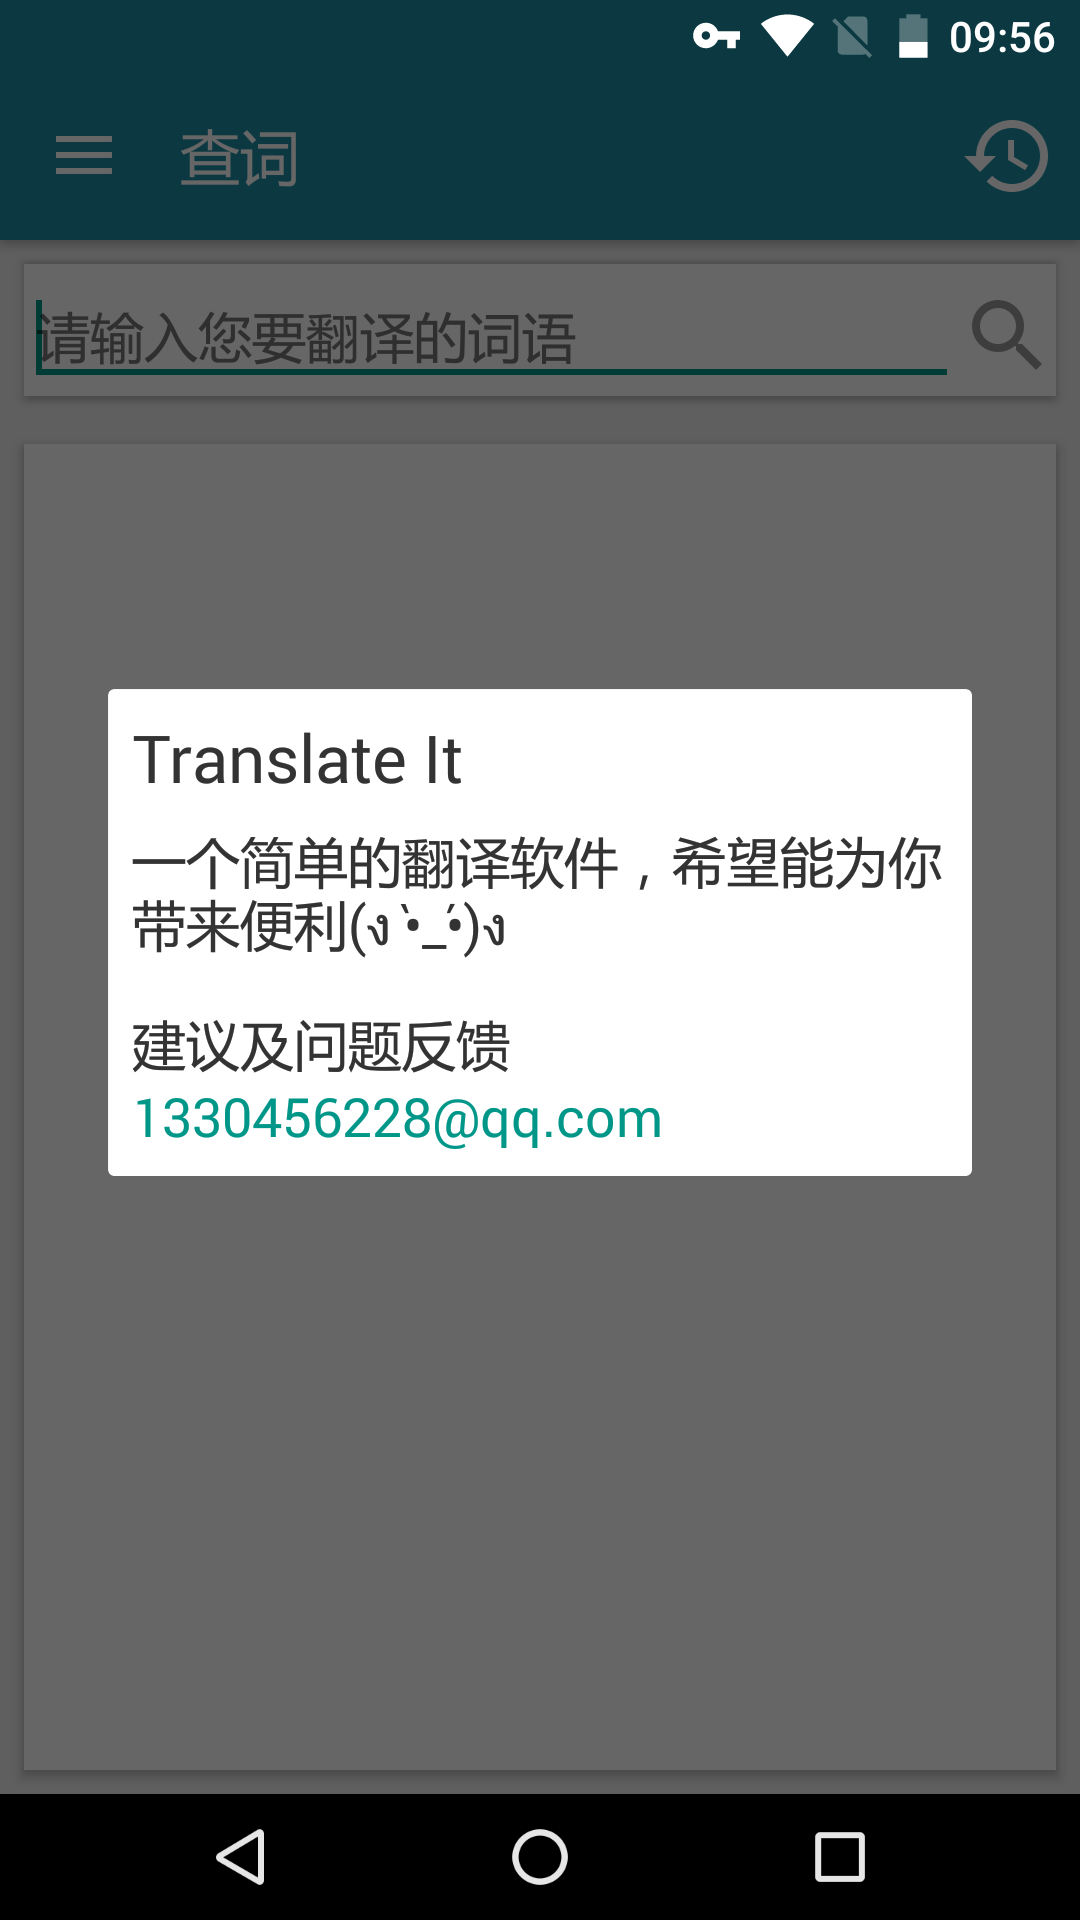 Translate It